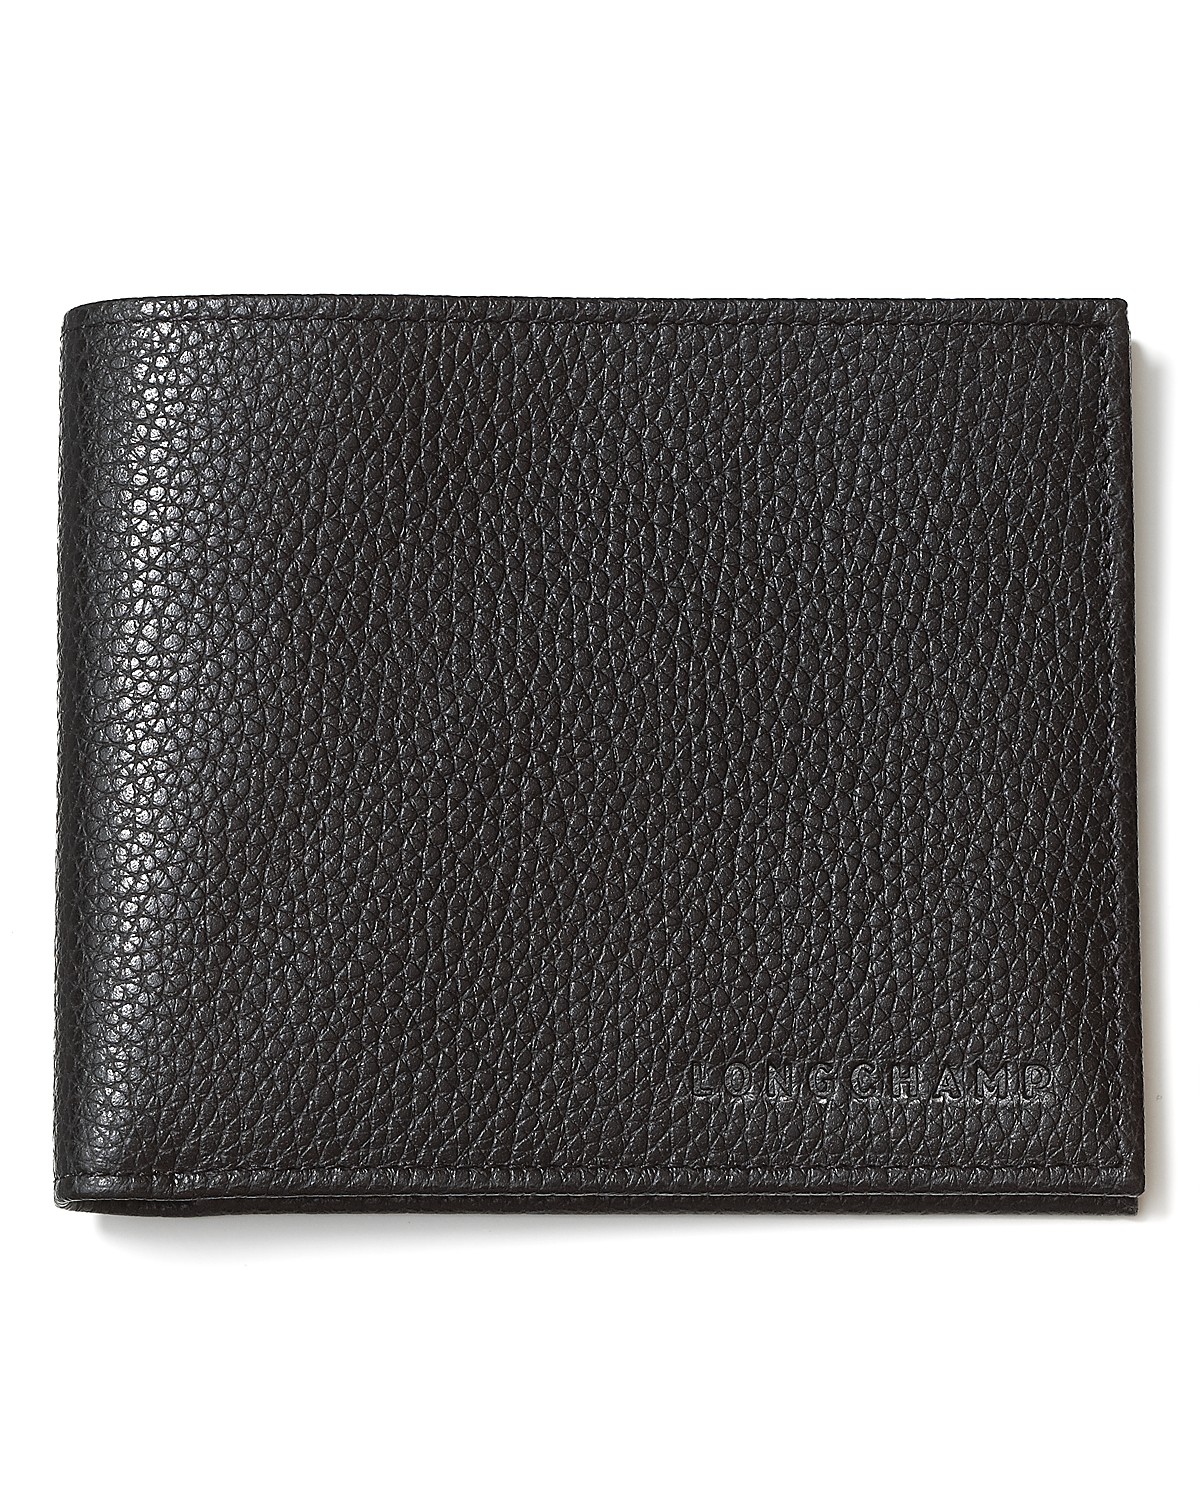 longchamp wallet